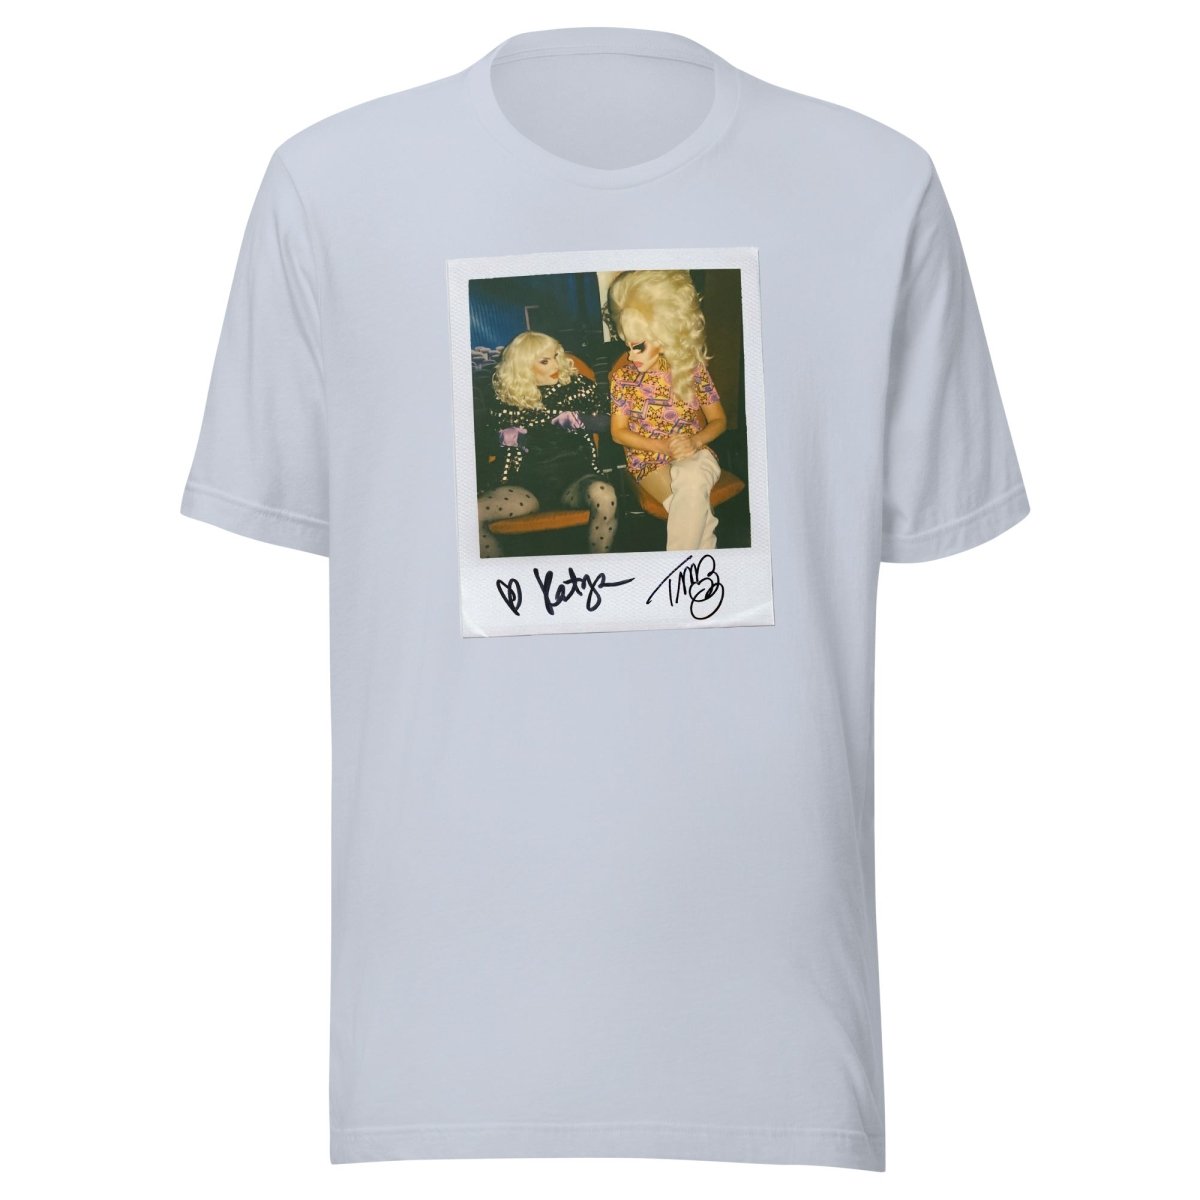 Trixie & Katya - Pus*y Watch T-shirt - dragqueenmerch